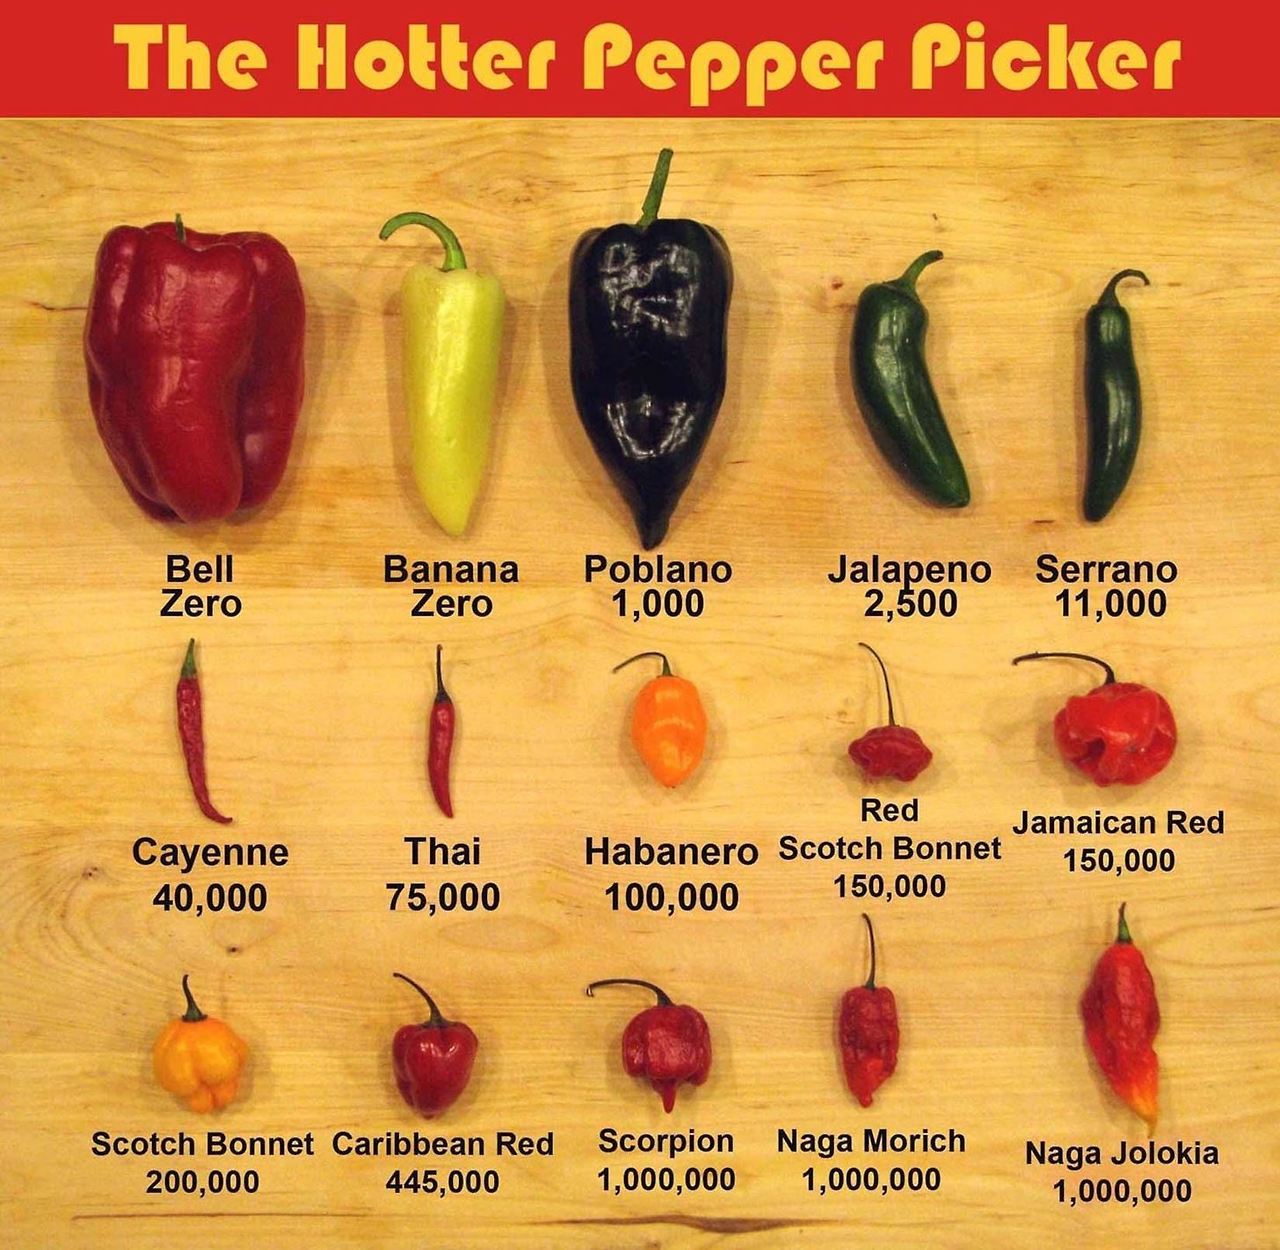 Hot Pepper Scale Chart